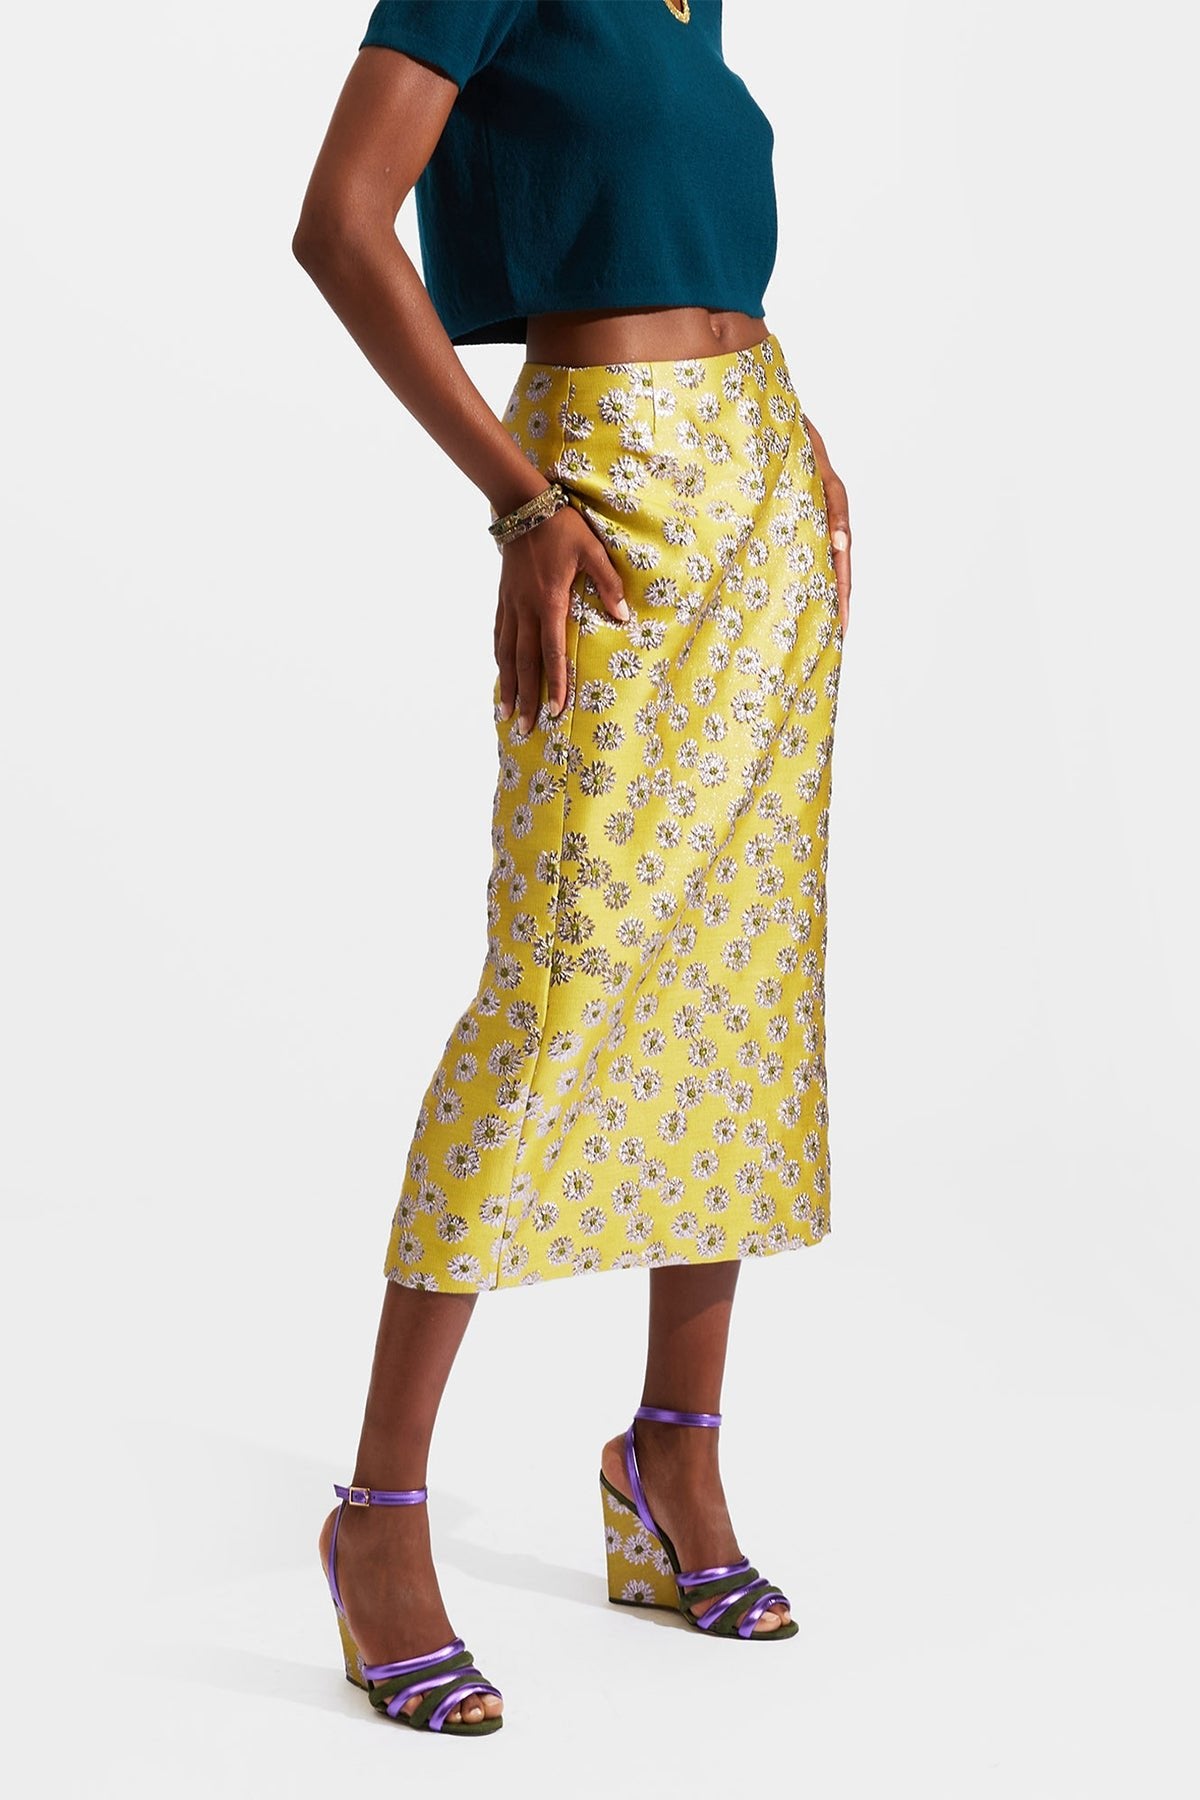 Pencil Skirt in Margarita - shop-olivia.com